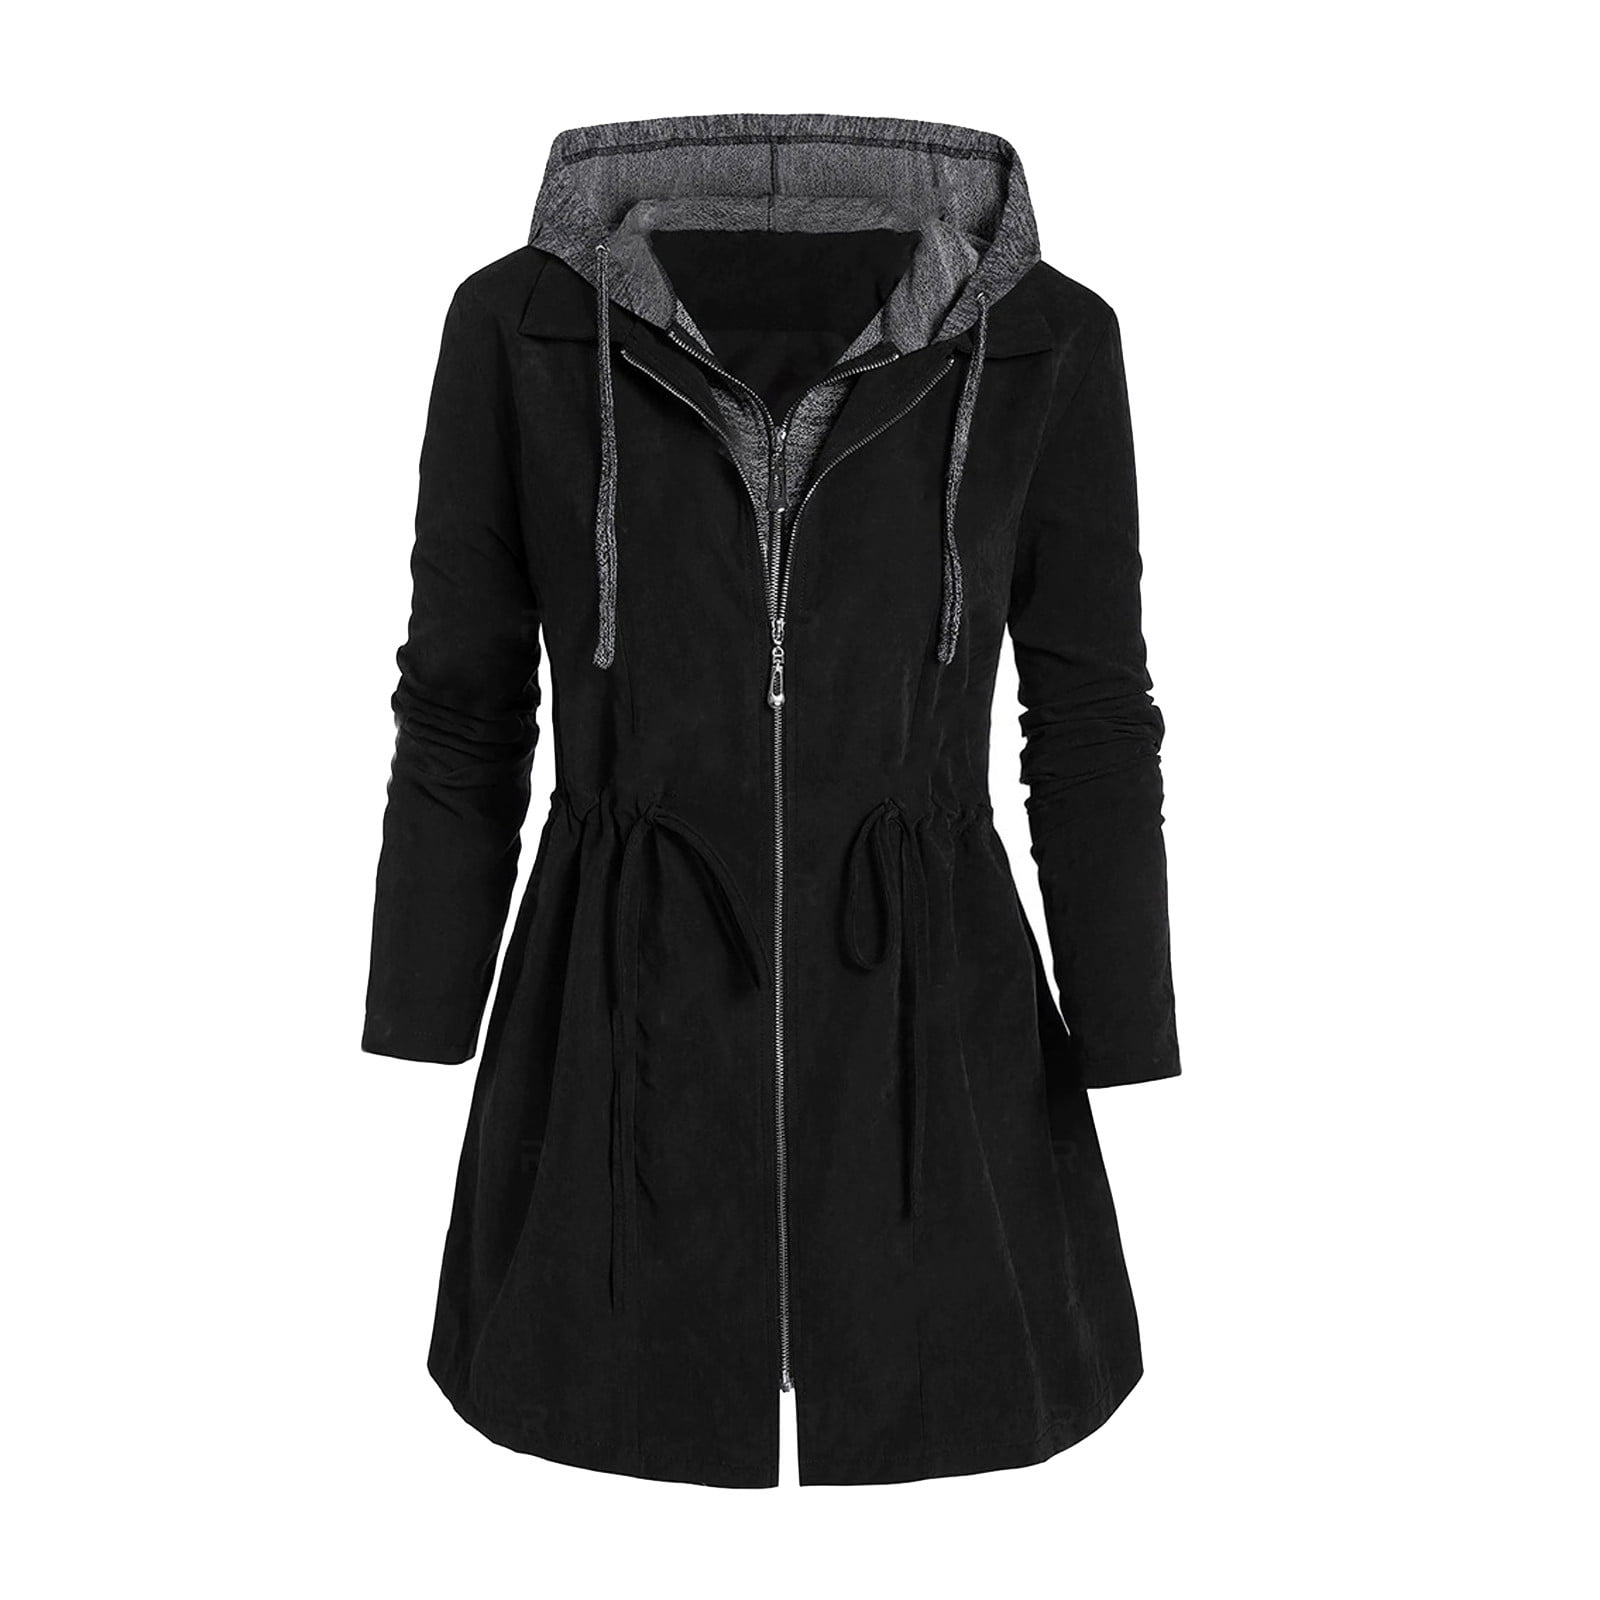 Skpblutn Women'S Jacket Coats Winter Fall Casual Comfortable Tops ...